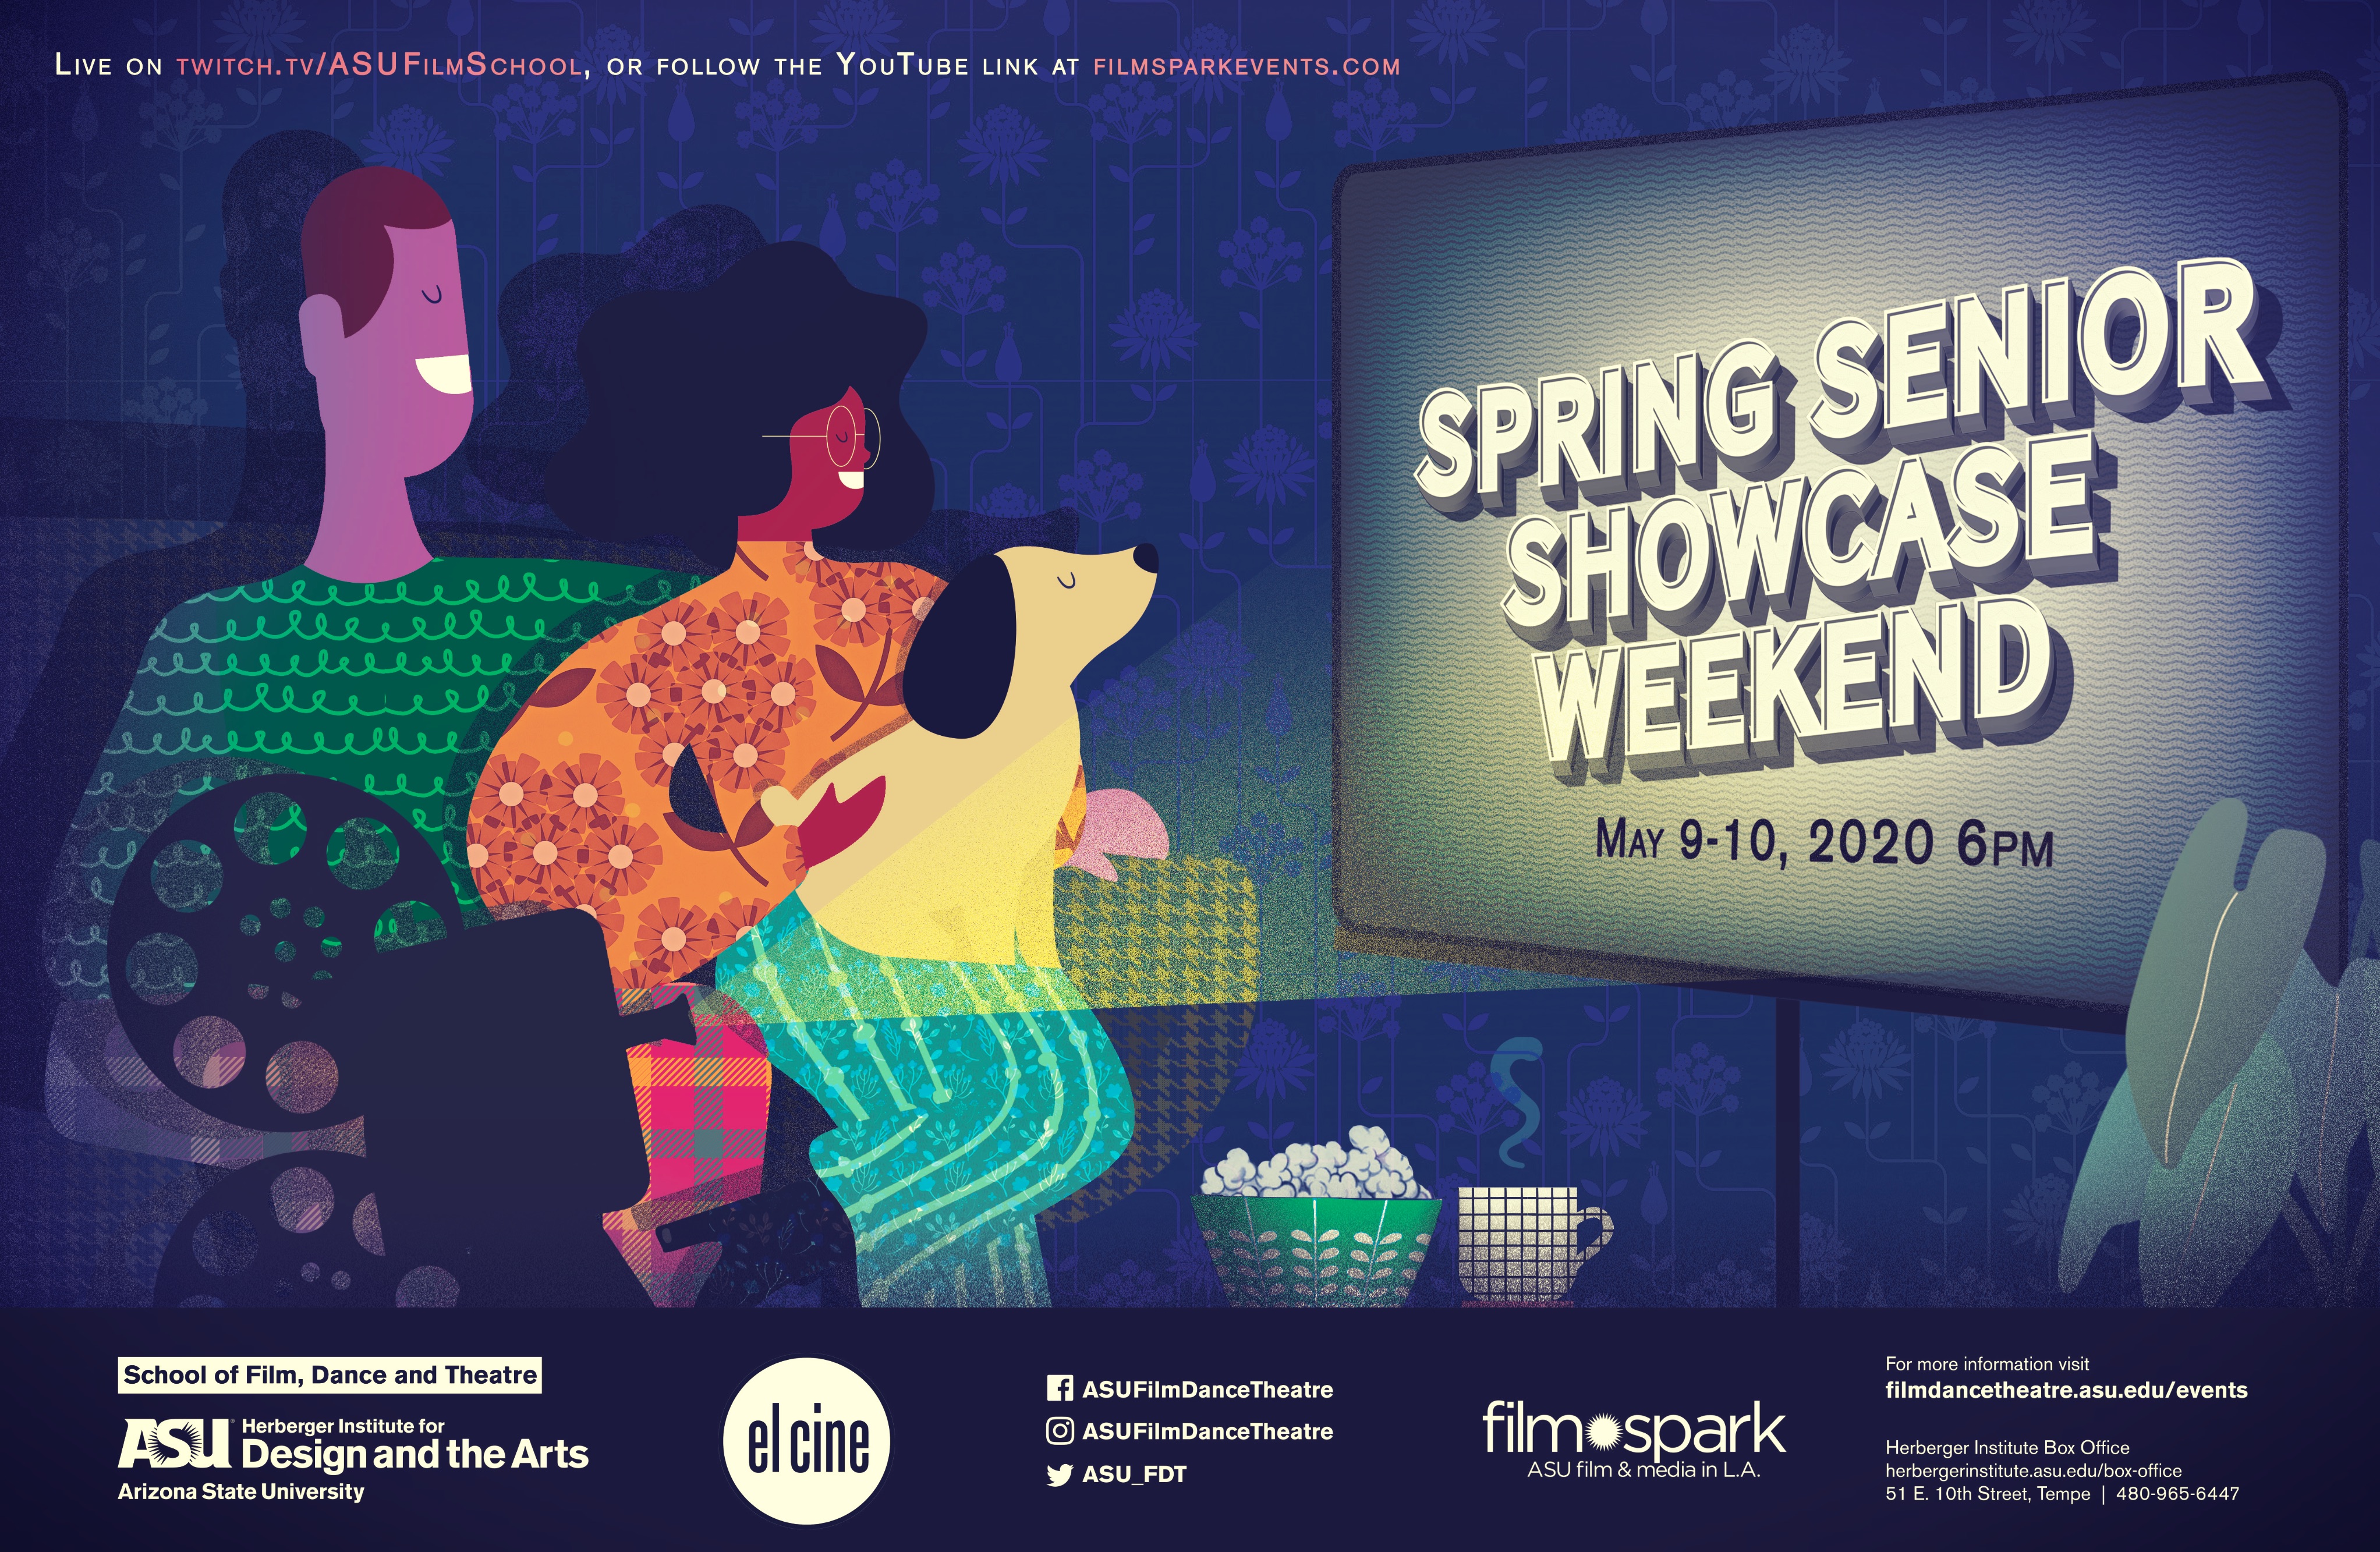 Spring Film Senior Showcase Weekend